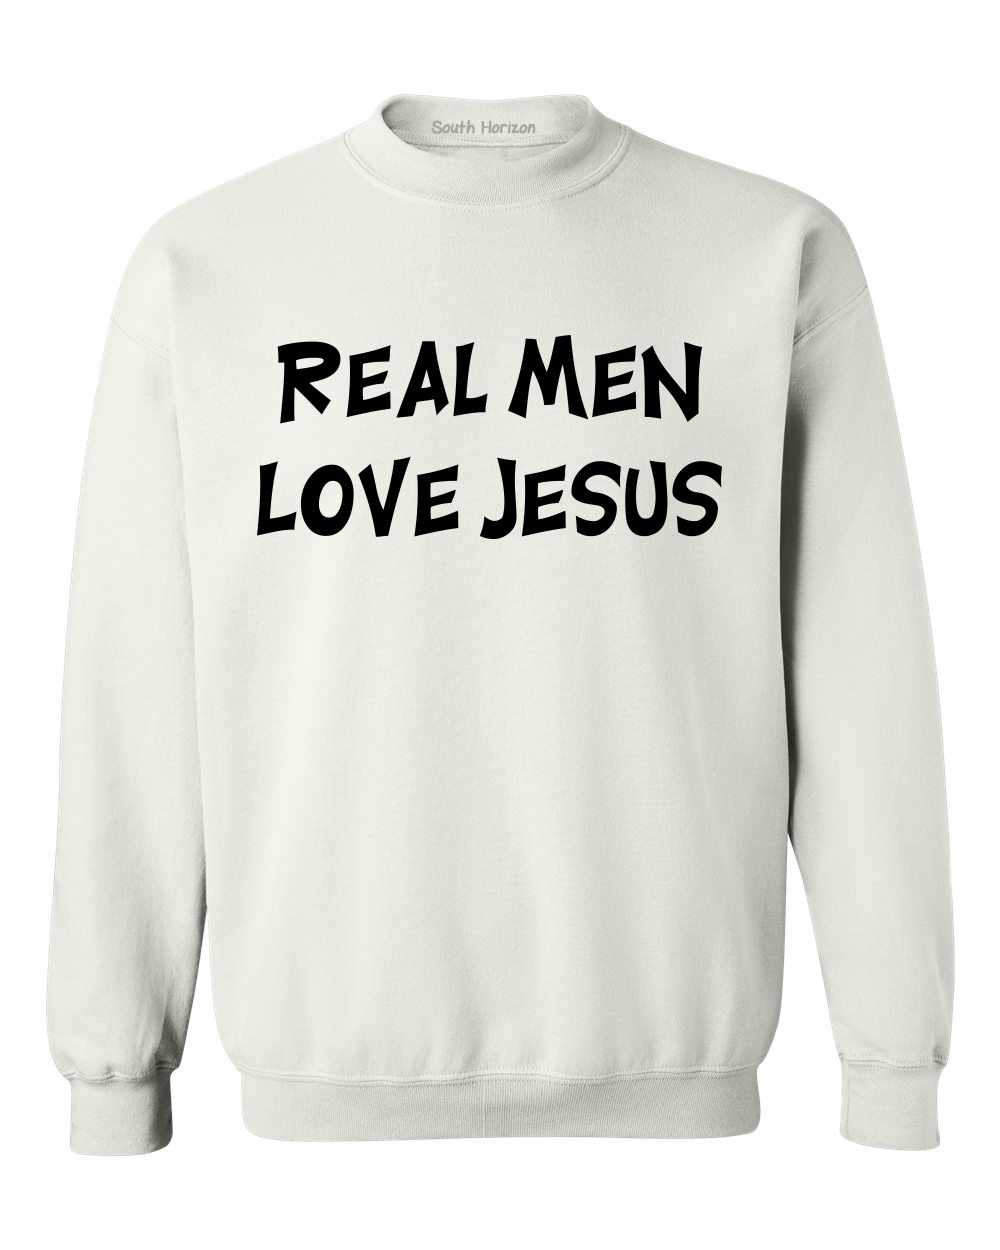 Real Men Love Jesus on SweatShirt